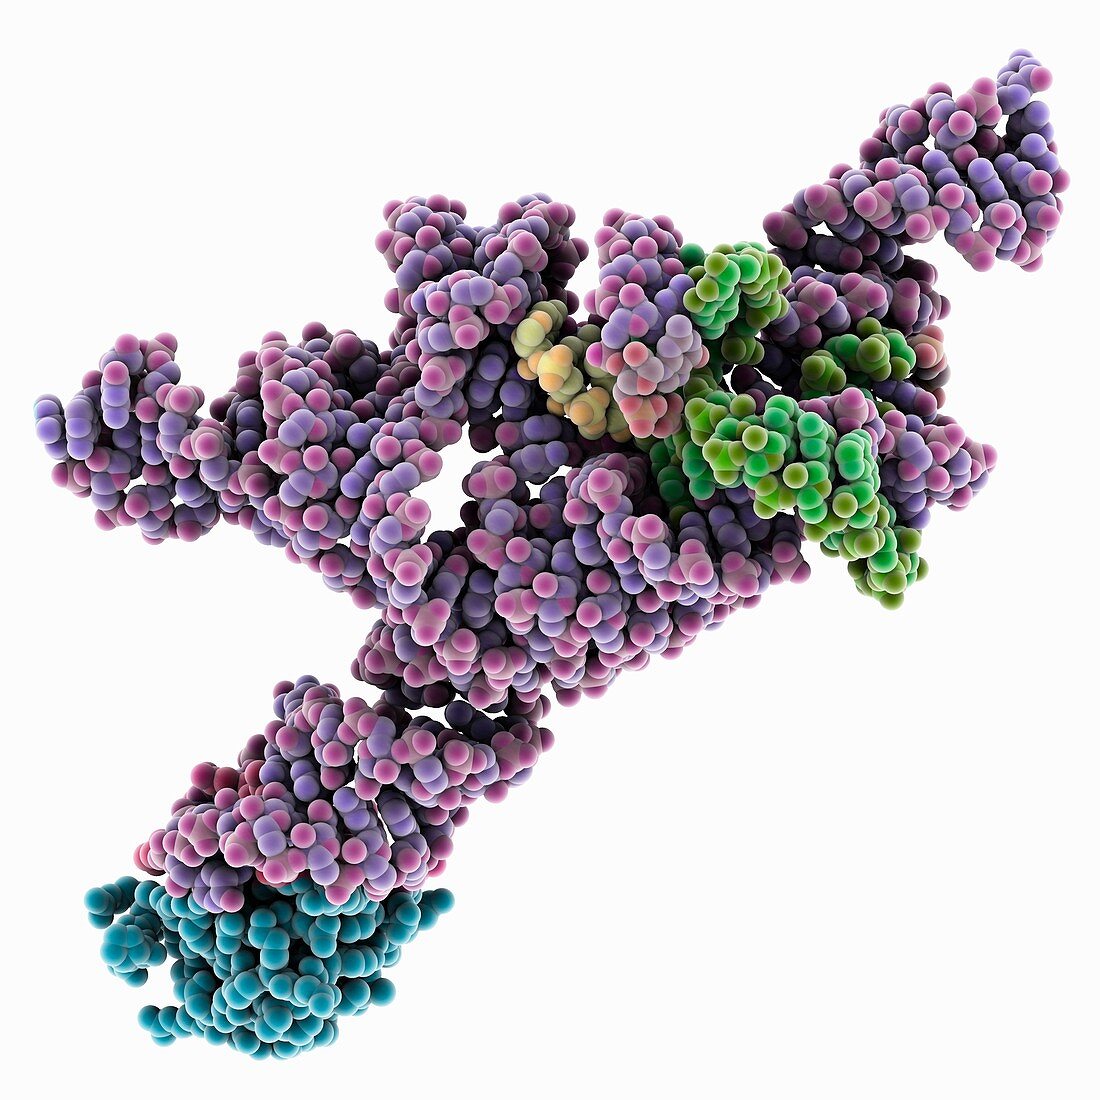 RNA kink turn structural motif